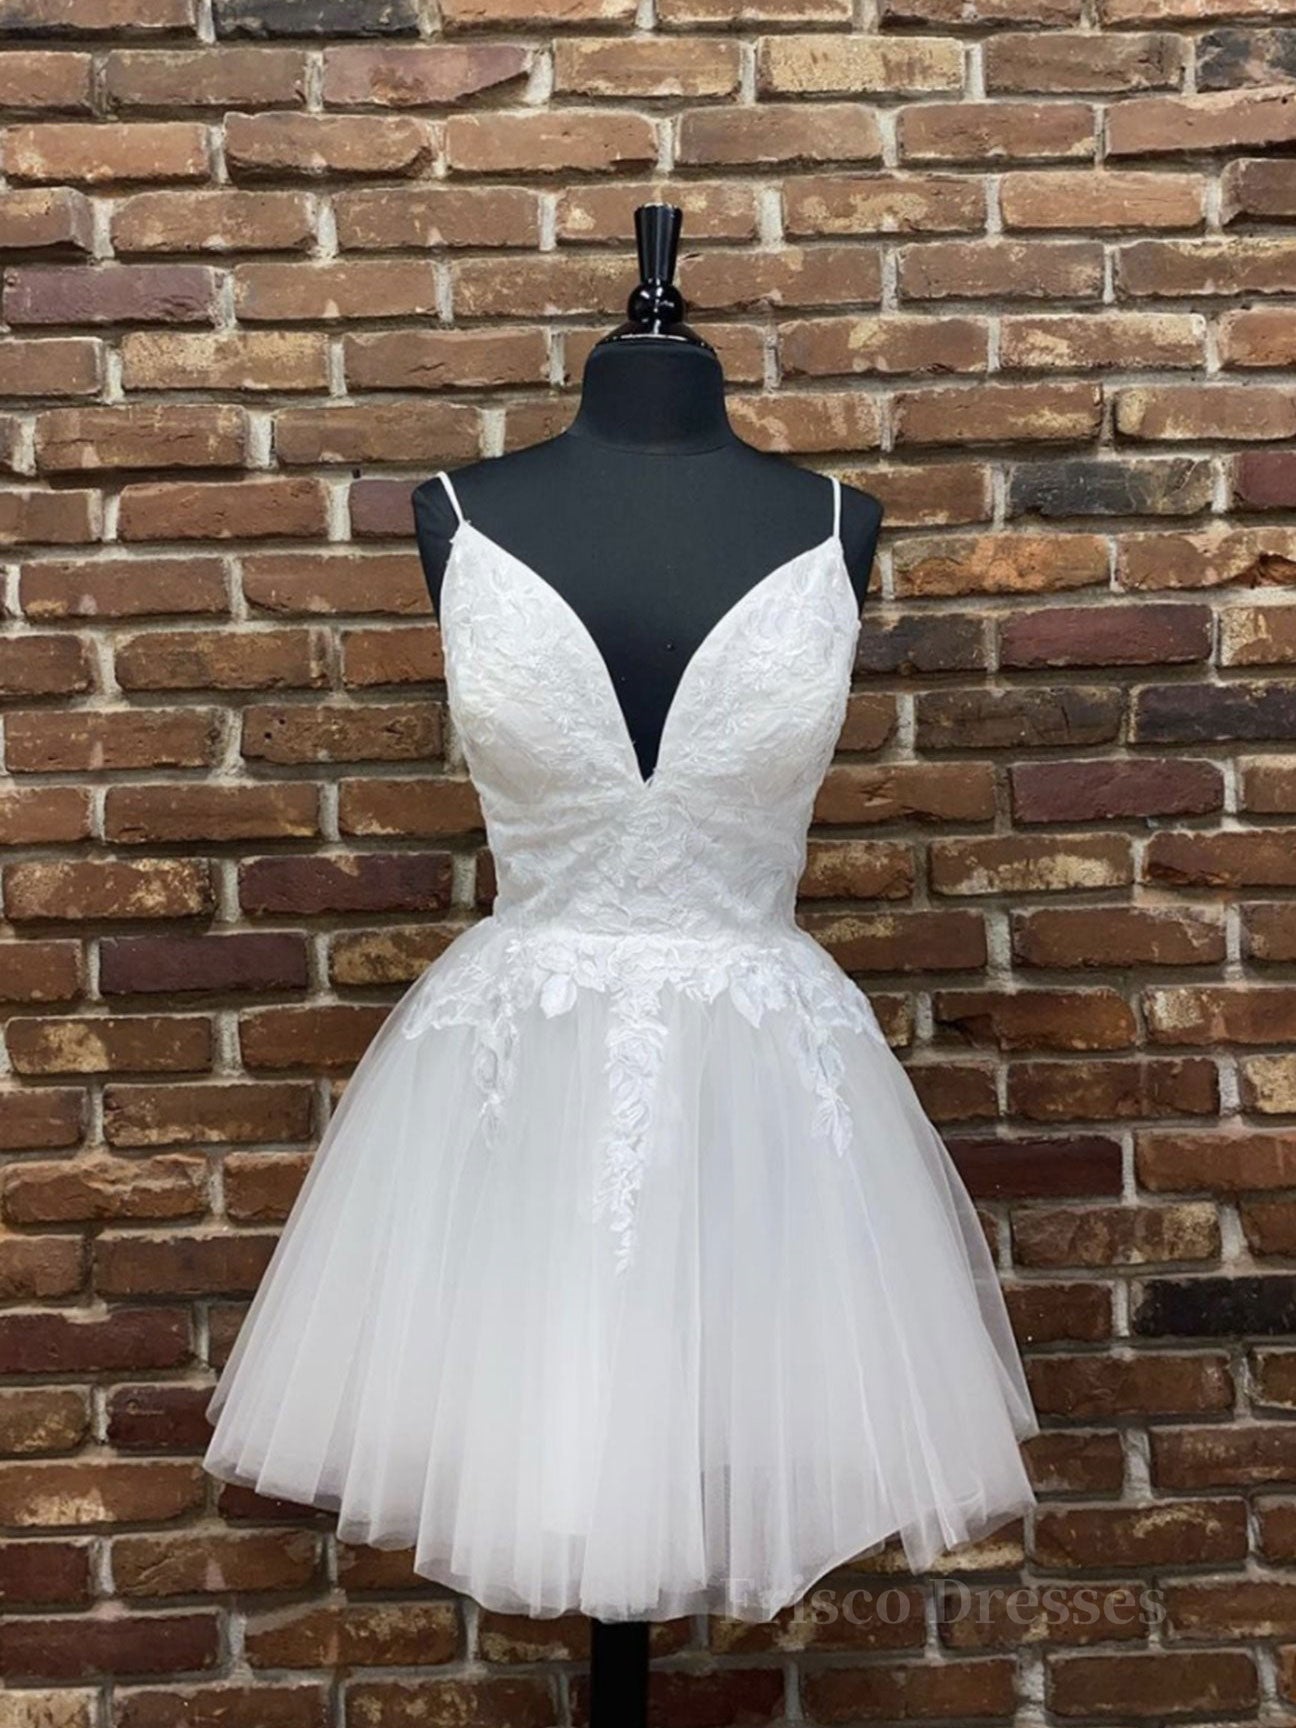 White v neck tulle lace short prom dress, white homecoming dress